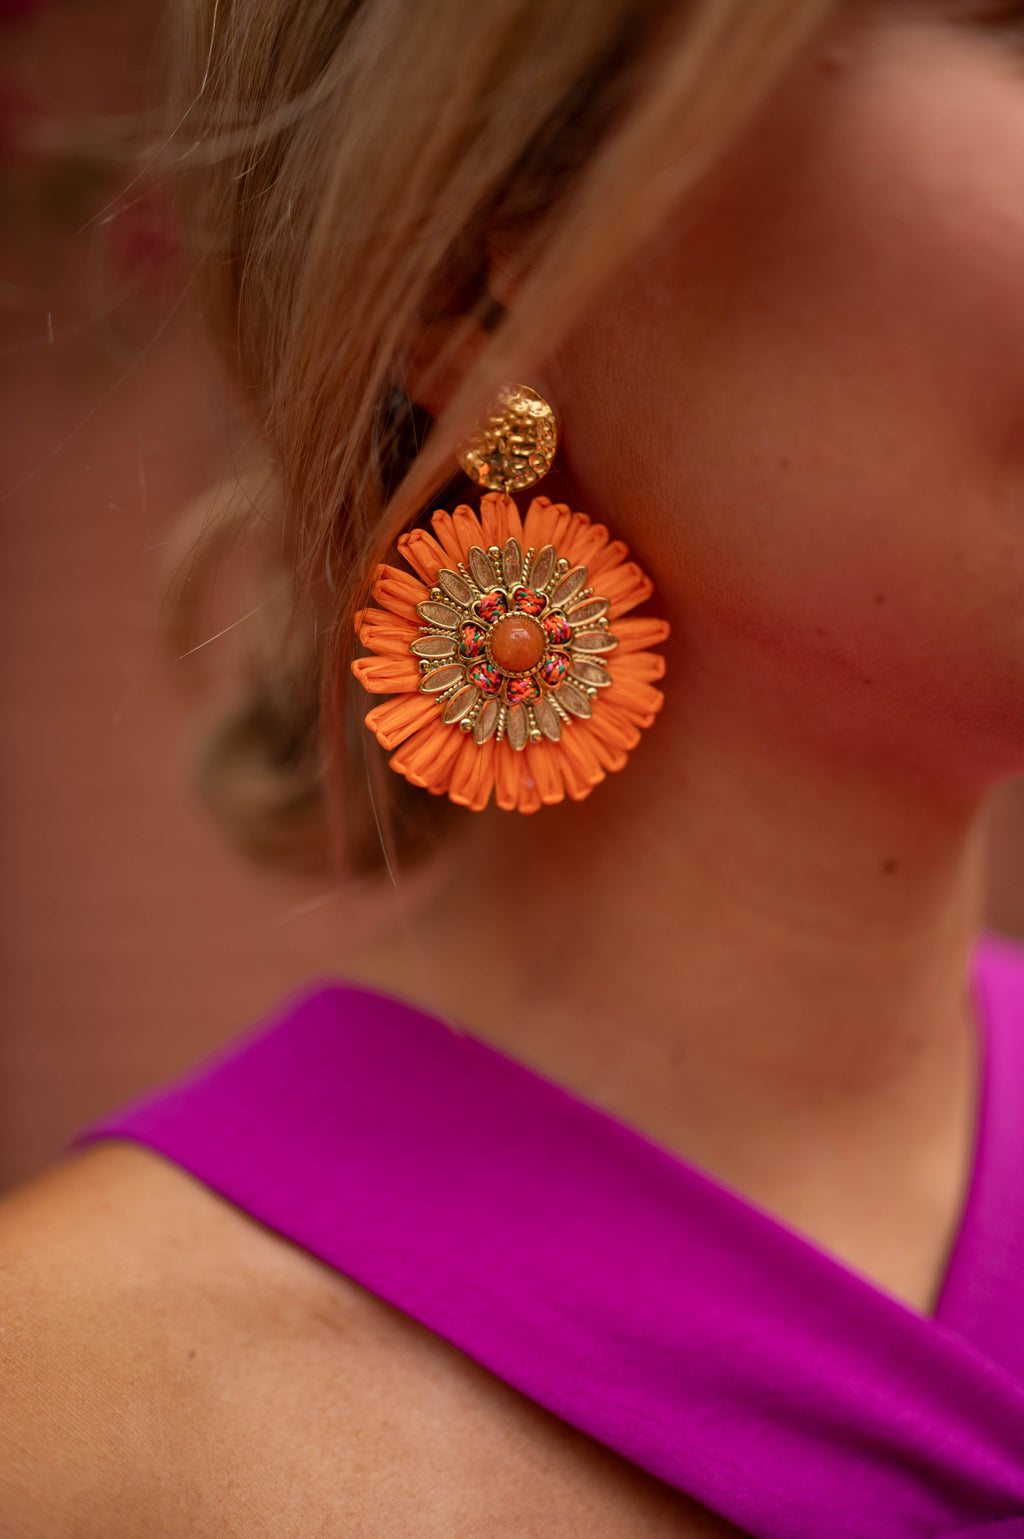 Aynu earrings - orange and golden